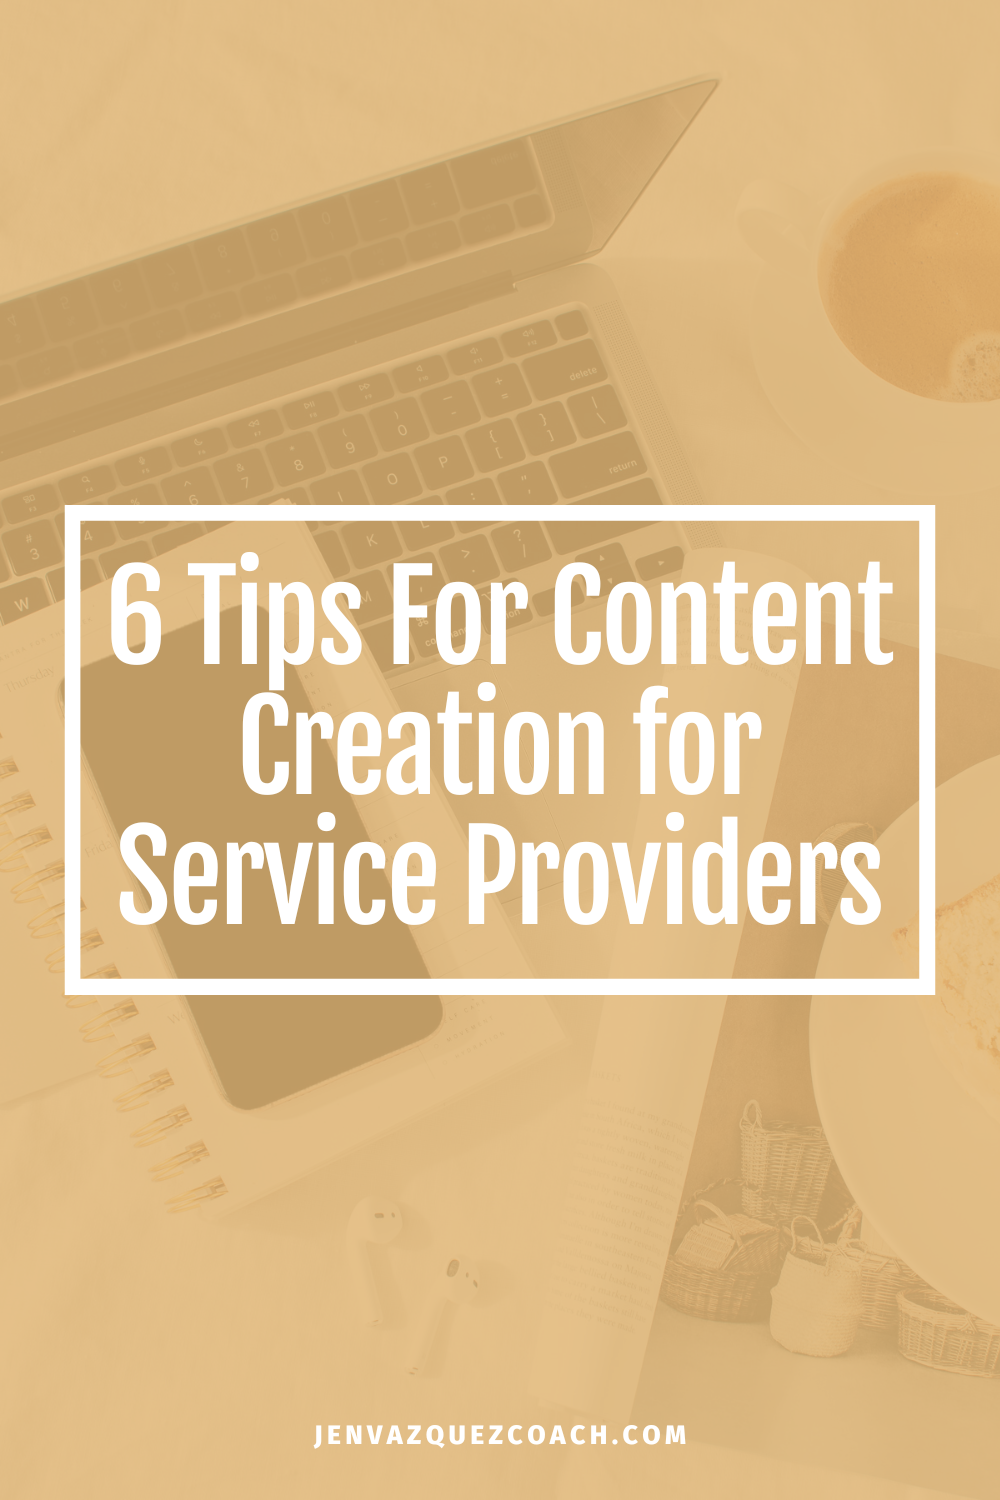 6 Tips To Content Creation for Service Providers by Jen Vazquez Media jenvazquezcoach.com